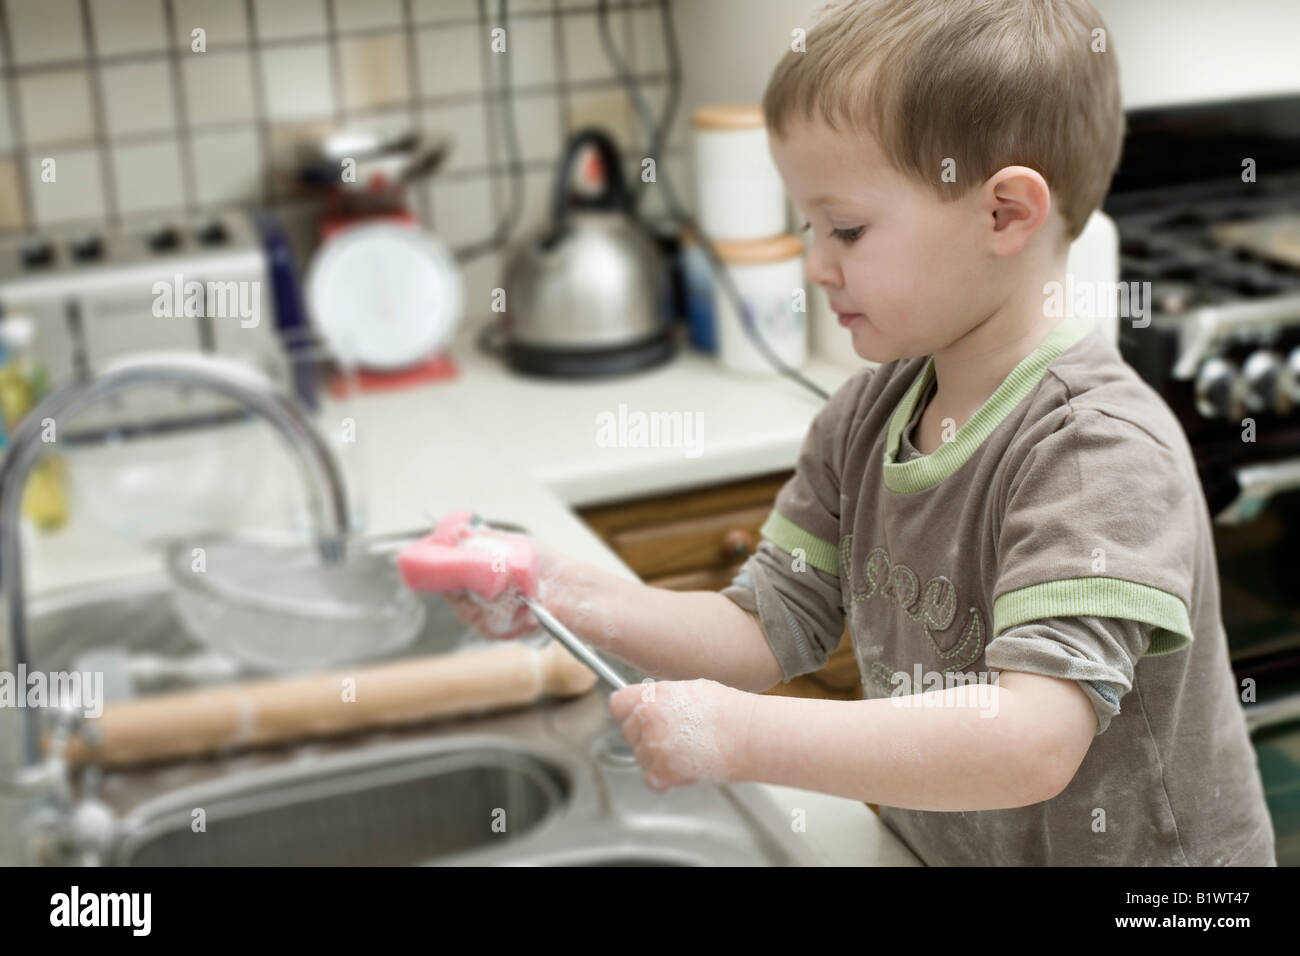 Child Washing Up at Kitchen Sink Stock Photo